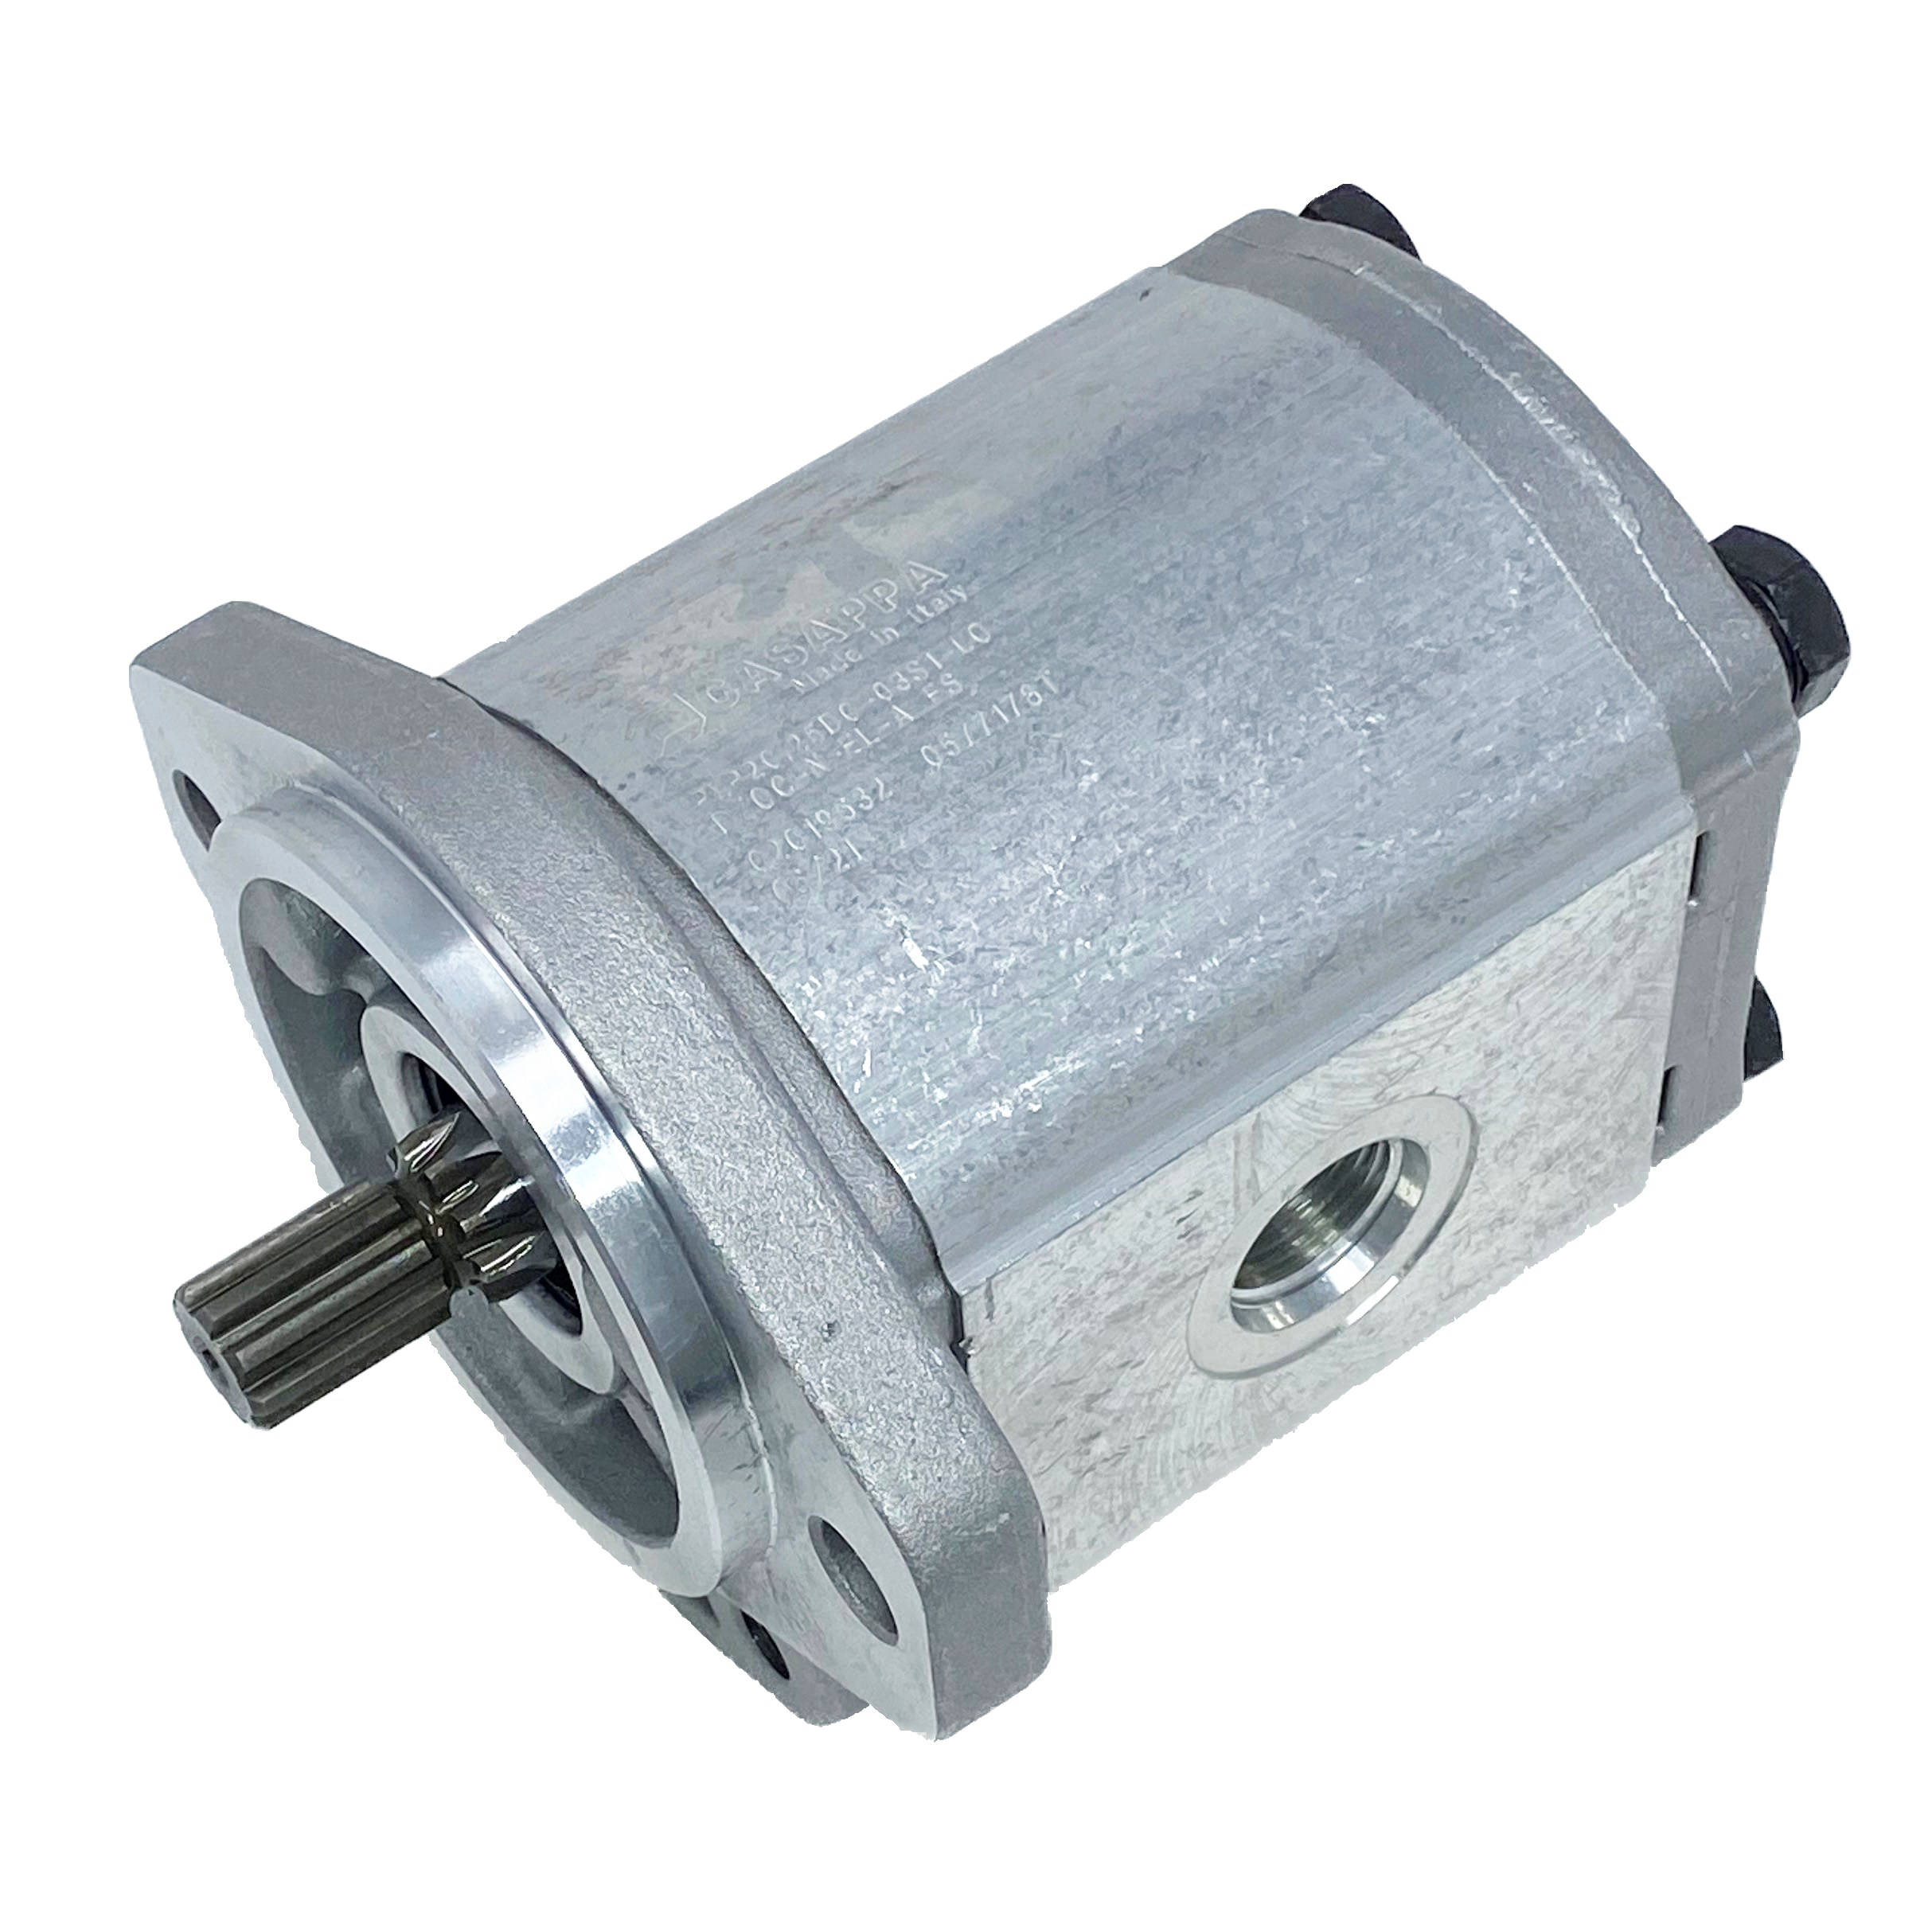 PLM20.25R0-03S1-LOC/OD-N-EL : Casappa Polaris Gear Motor, 26.42cc, 2465psi Rated, 3045RPM, Reversible Rear External Drain, 9T 16/32dp Shaft, SAE A 2-Bolt Flange, 0.625 (5/8") #10 SAE Inlet, 0.75 (3/4") #12 SAE Outlet, Aluminum Body & Flange